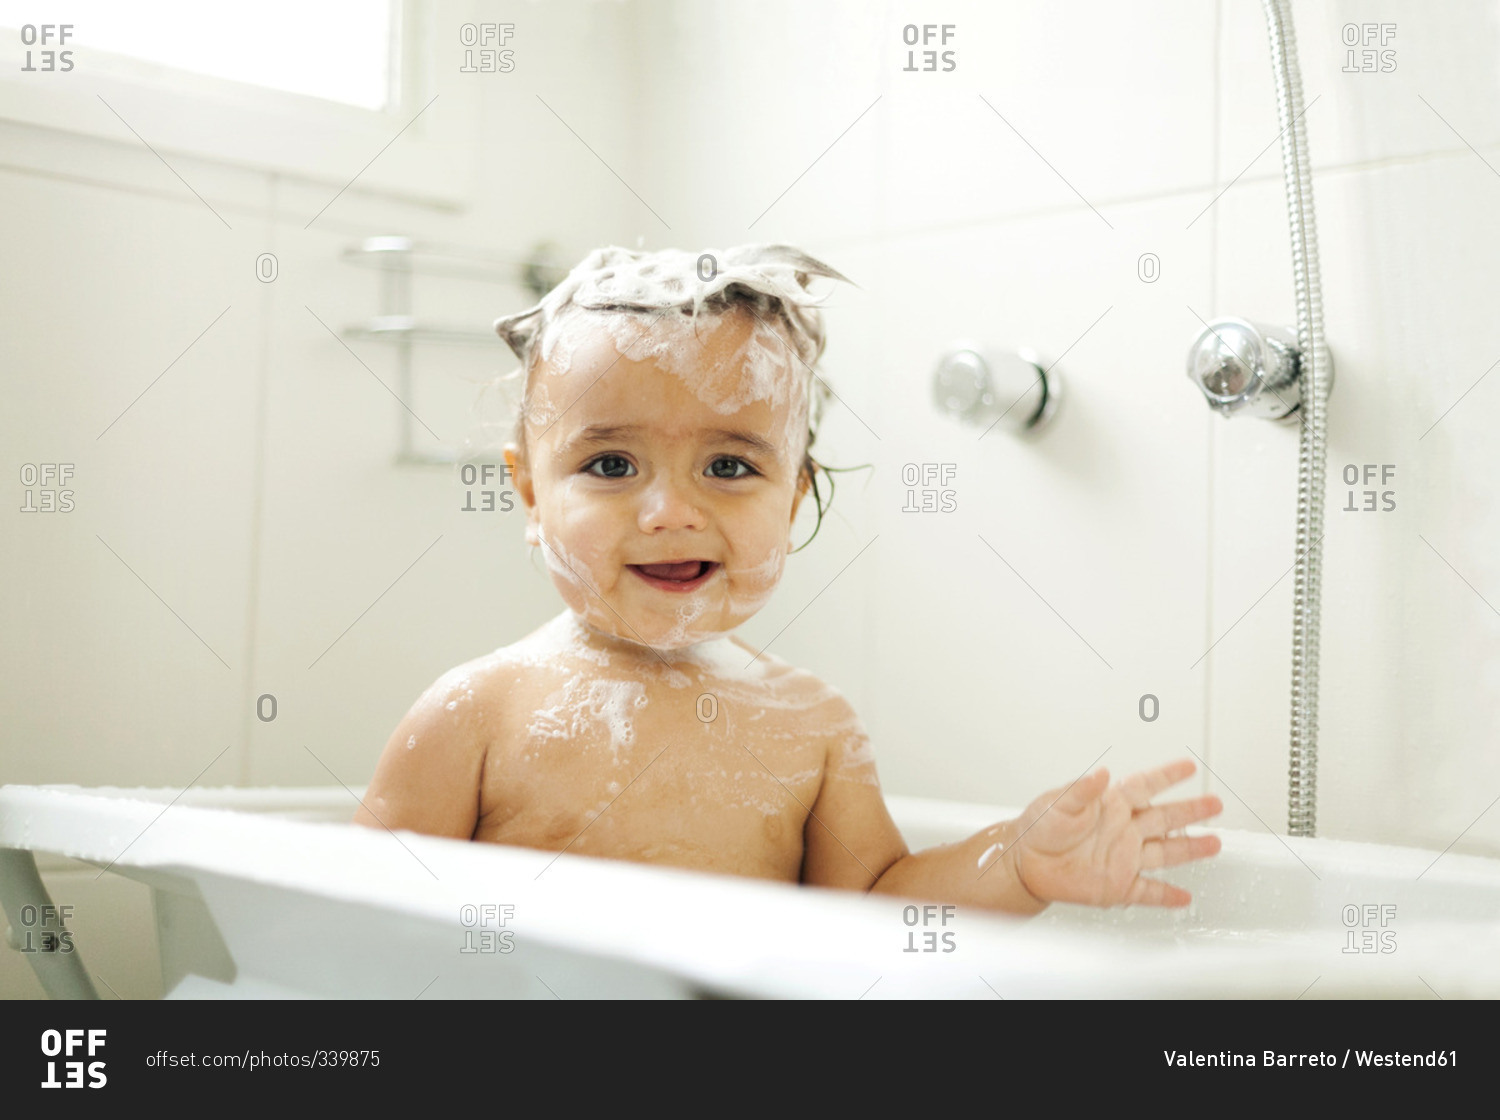 Portrait of smiling baby boy with foam in his hair sitting in bathtub